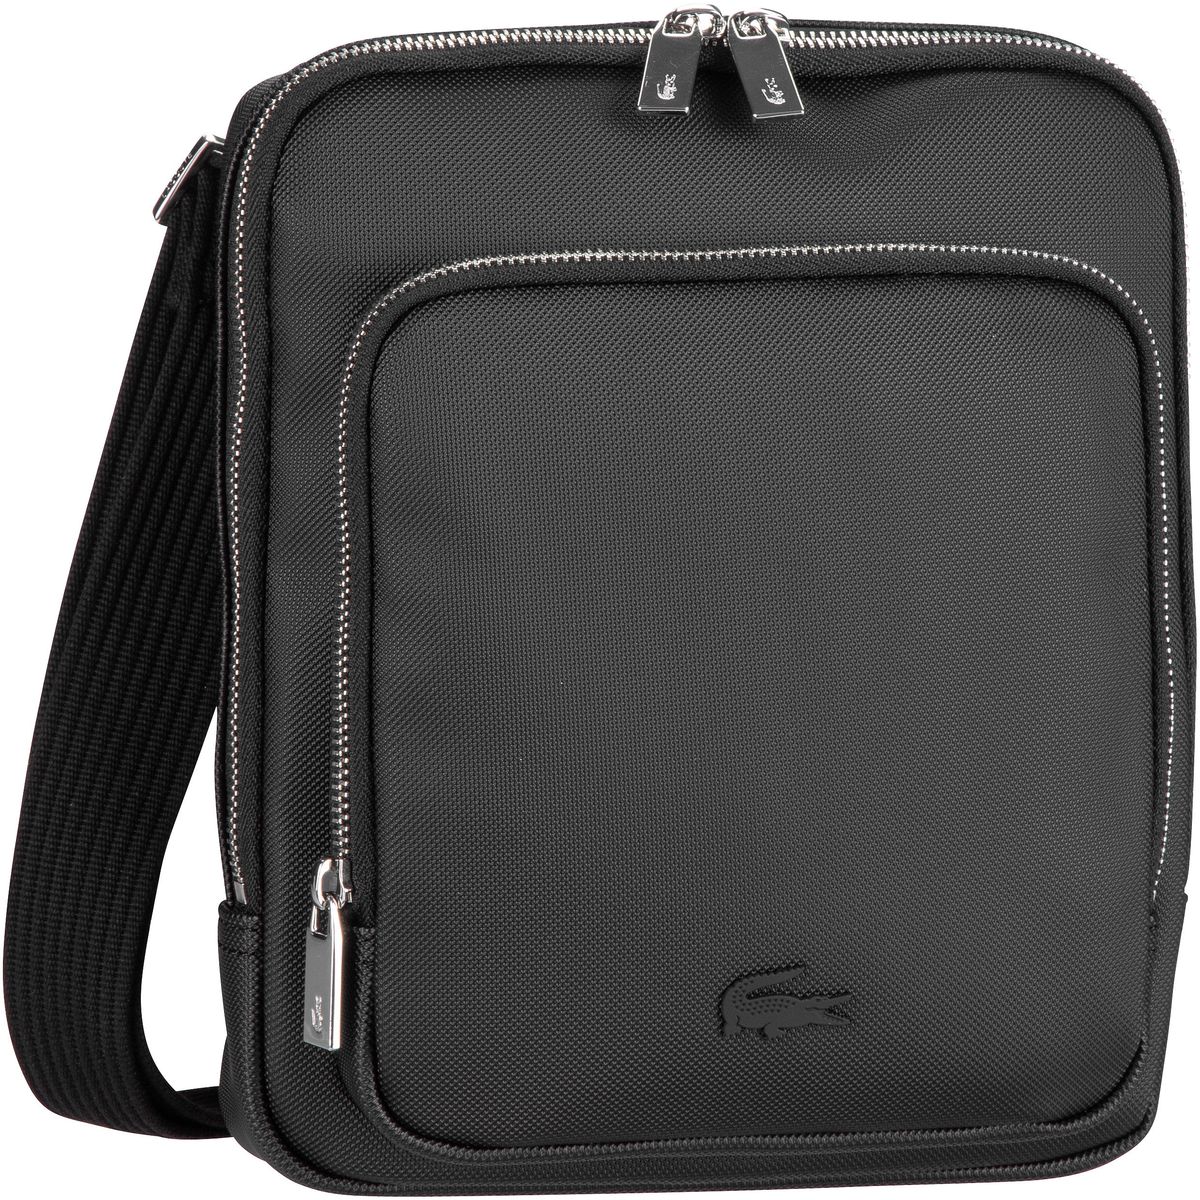 Lacoste Men's Classic Crossover Bag 3284 - Black